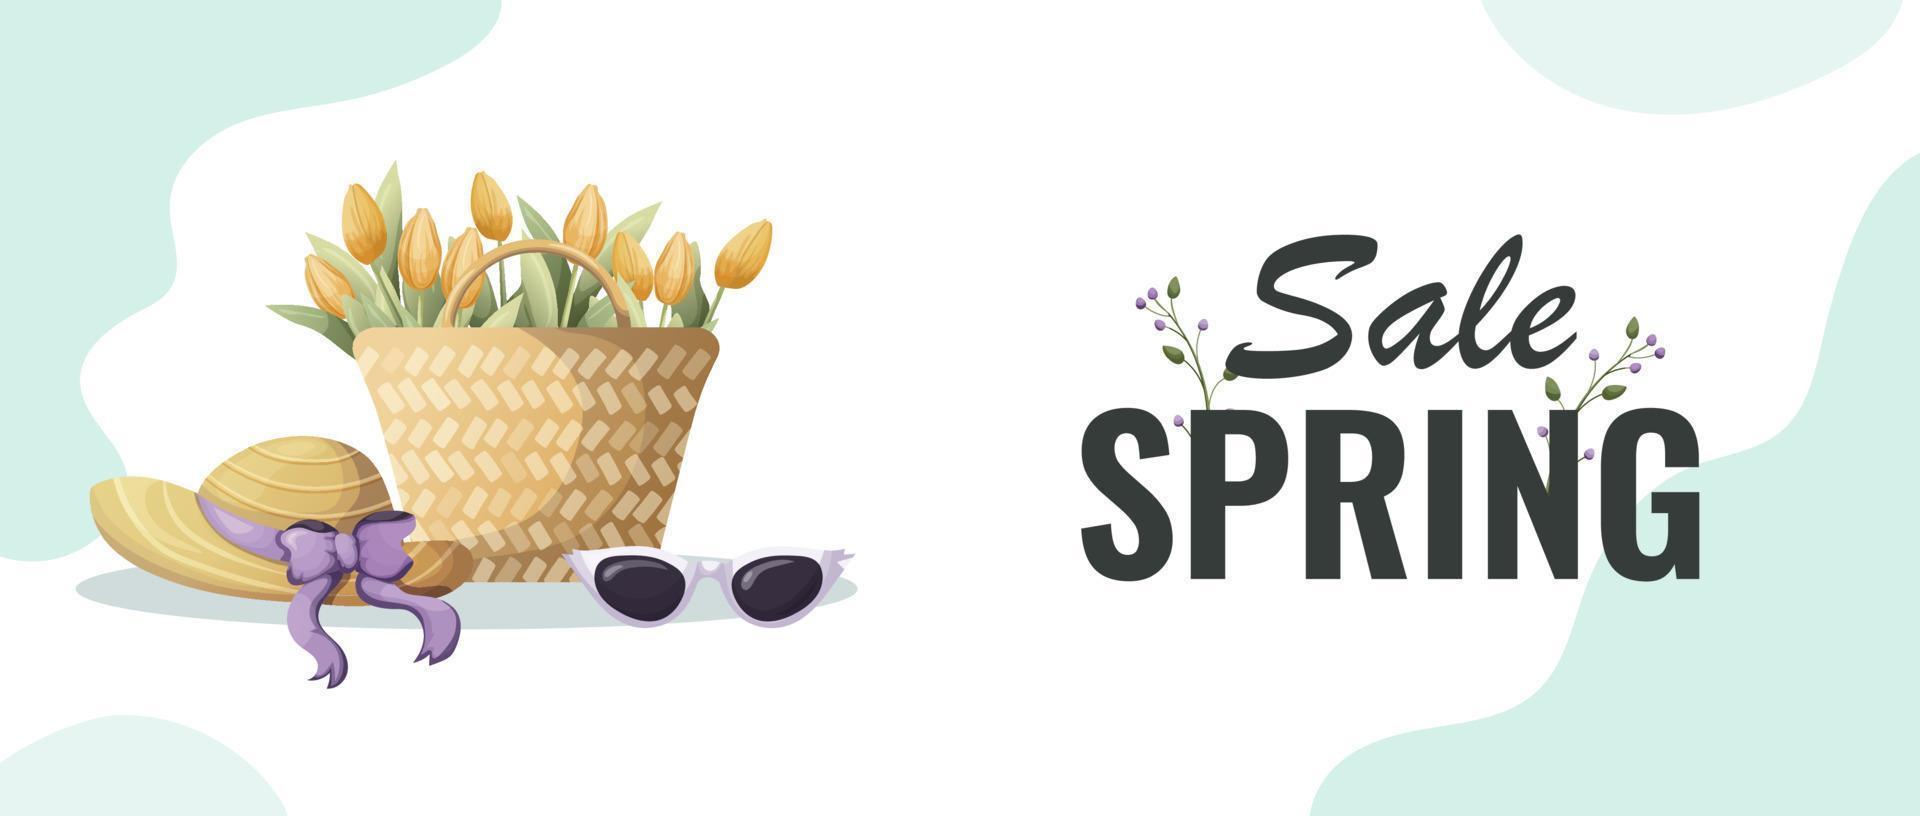 Moda promoción bandera modelo con floral elementos. primavera flores, tulipanes, hojas. adecuado para social redes, postales, pancartas, web. vector